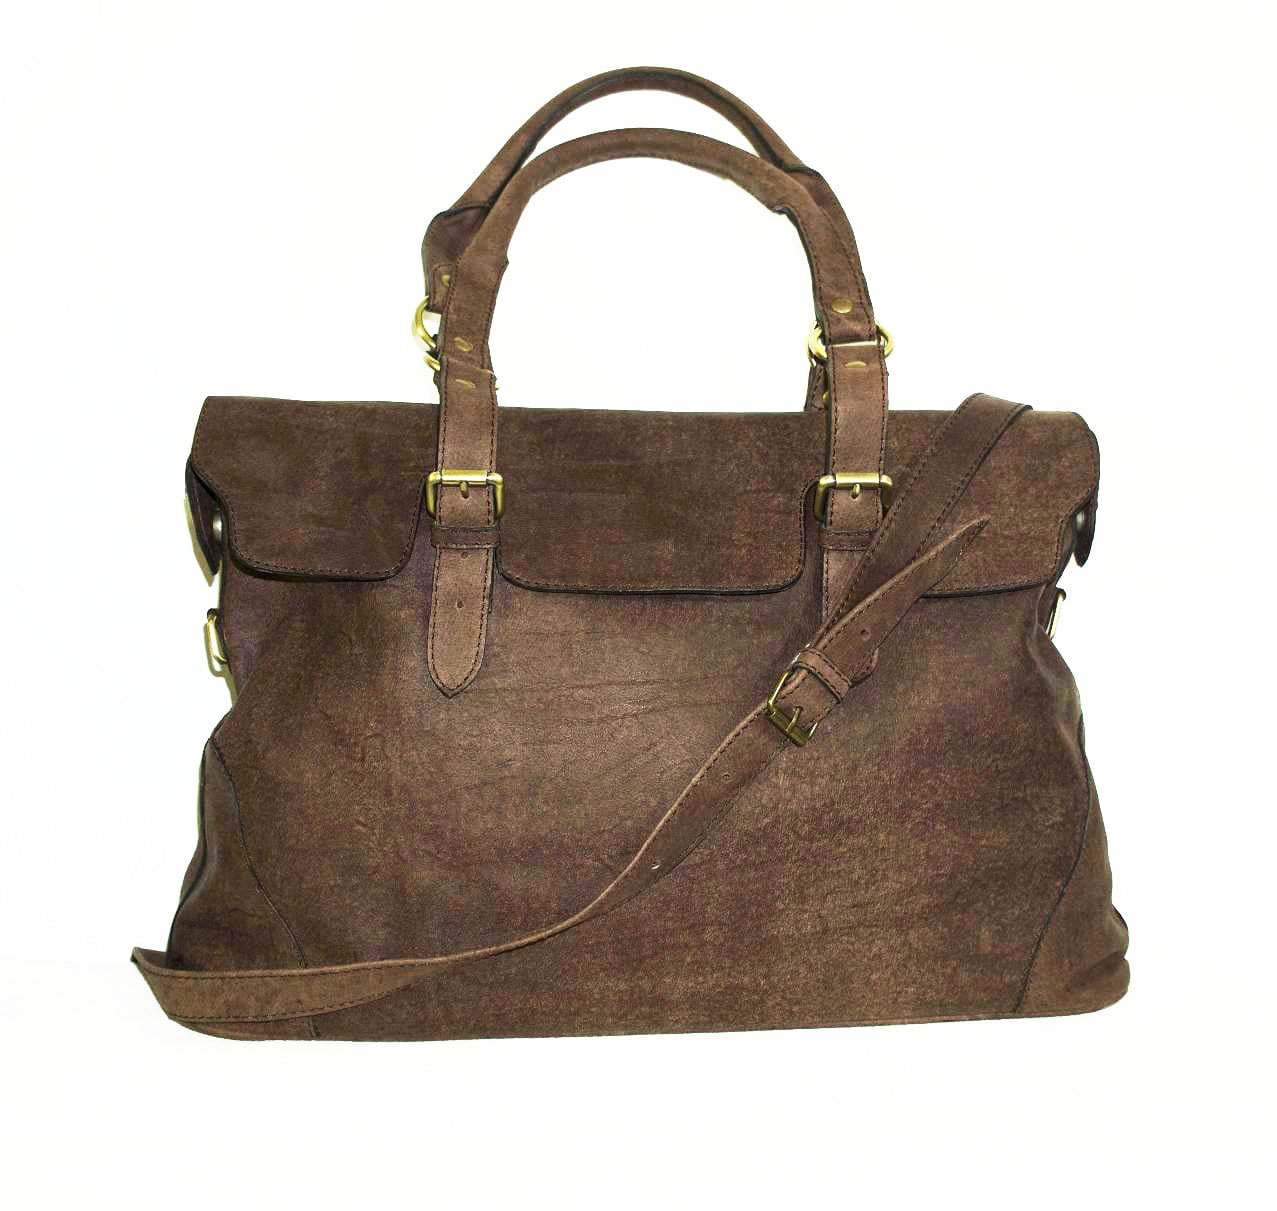 Distressed Brown Leather Tote // Travel Bag // Shoulder